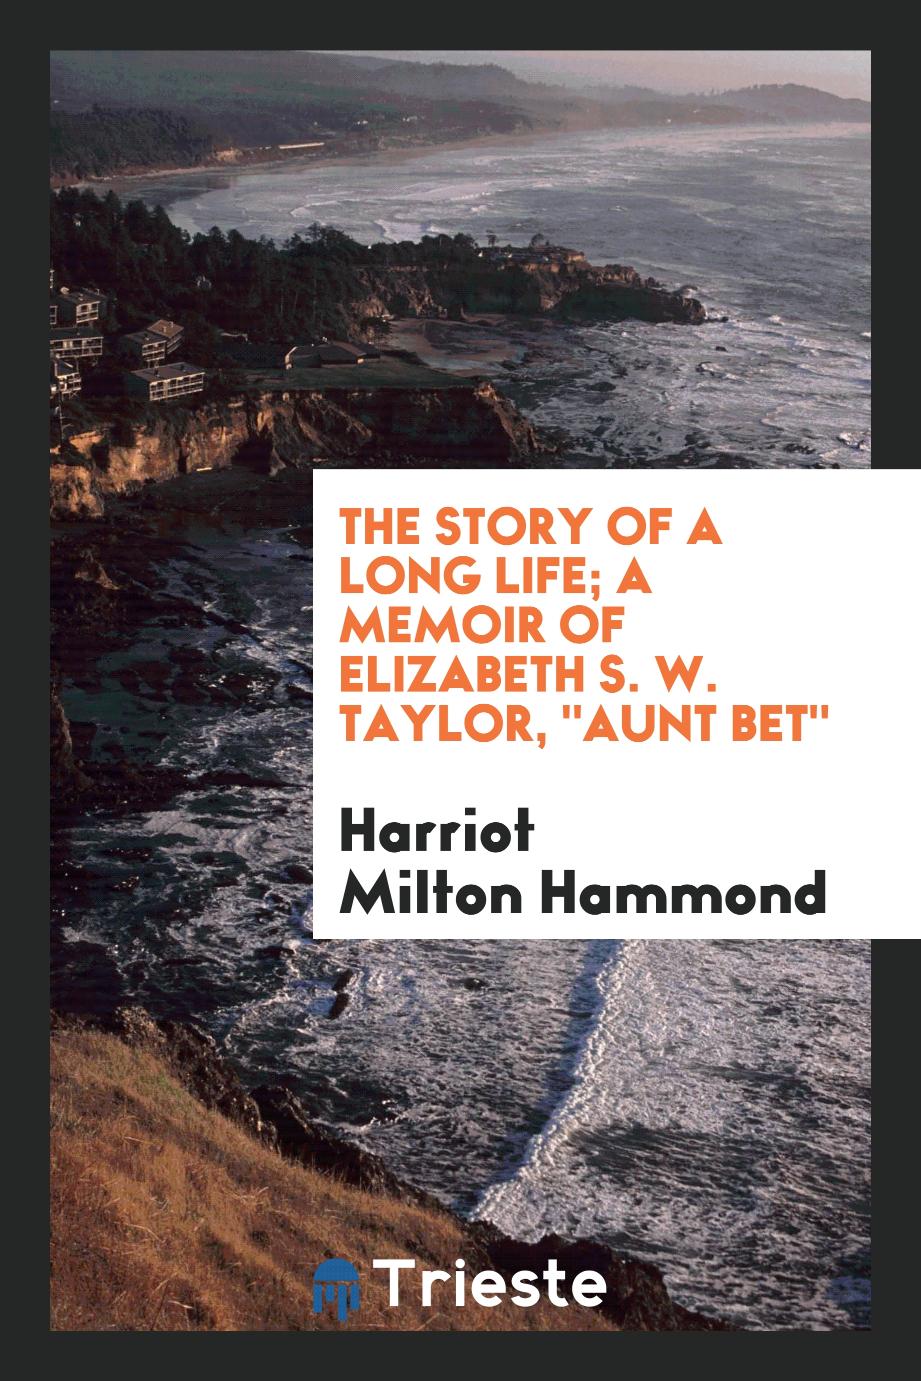 Harriot Milton Hammond - The story of a long life; a memoir of Elizabeth S. W. Taylor, "Aunt Bet"